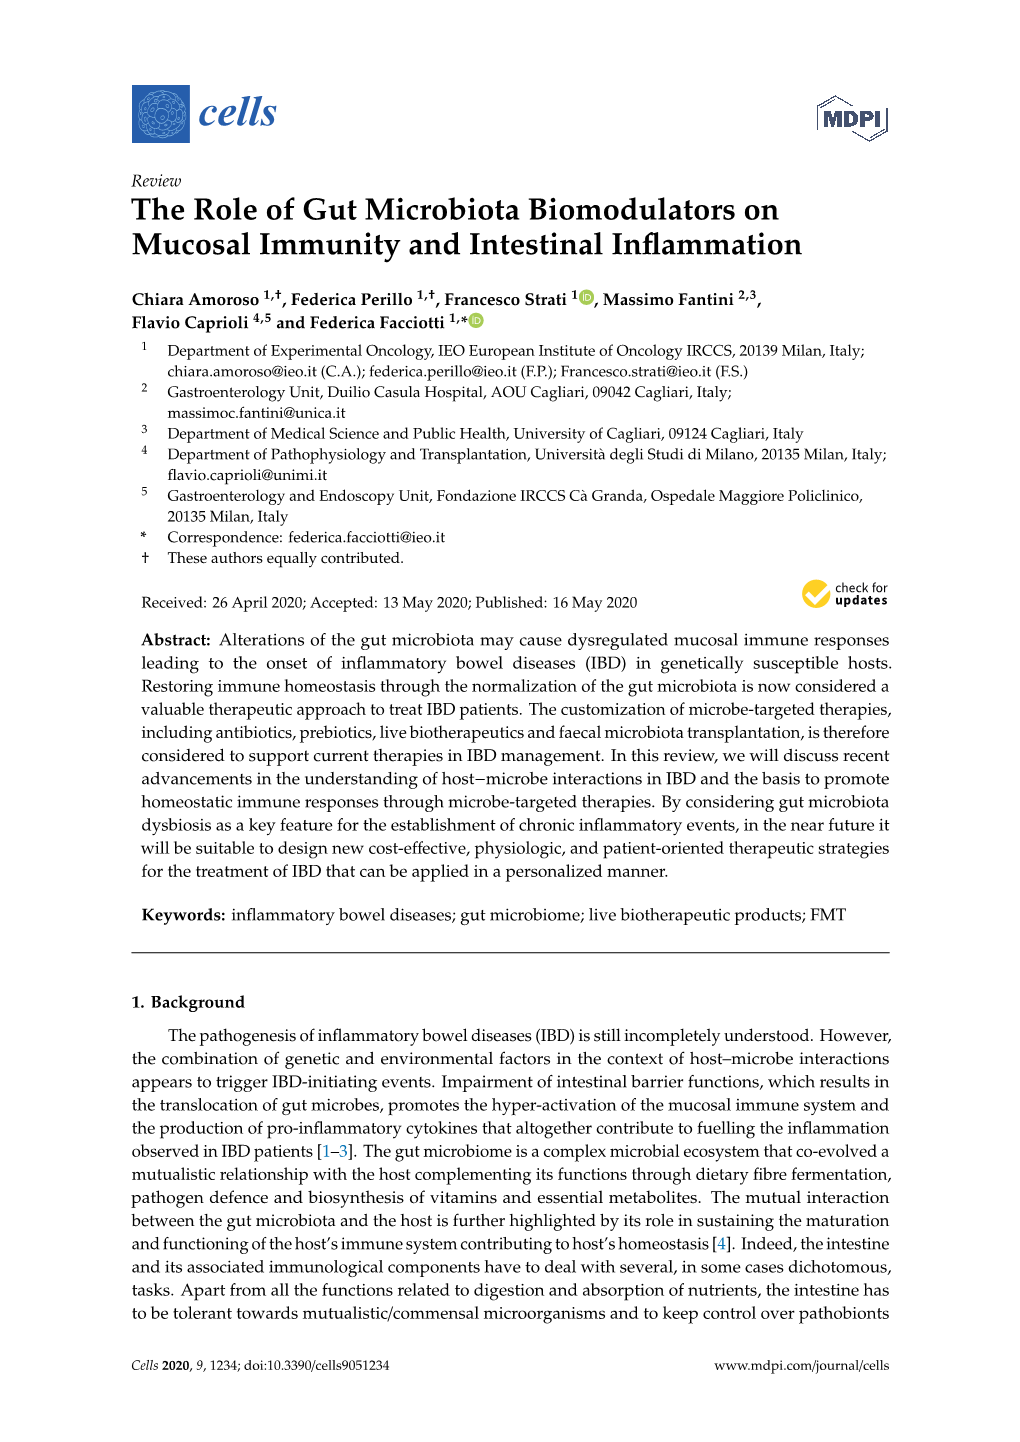 The Role of Gut Microbiota Biomodulators on Mucosal Immunity and Intestinal Inﬂammation